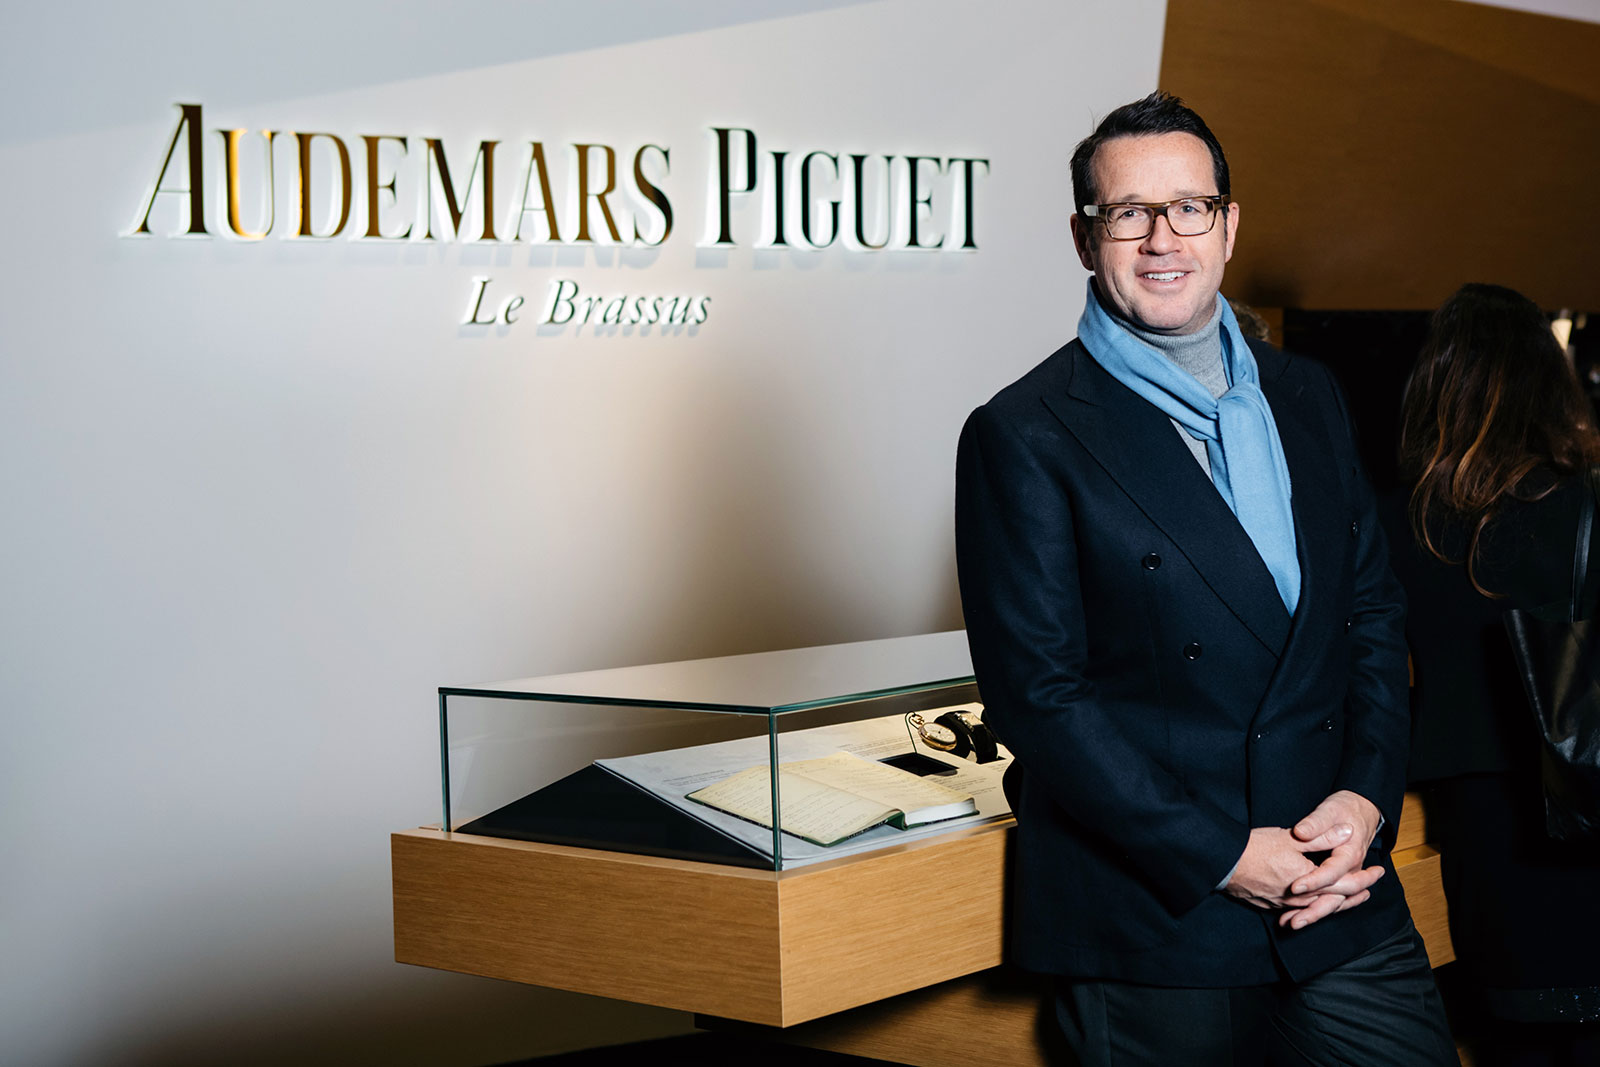 François-Henry Bennahmias Officially Named CEO of Audemars Piguet